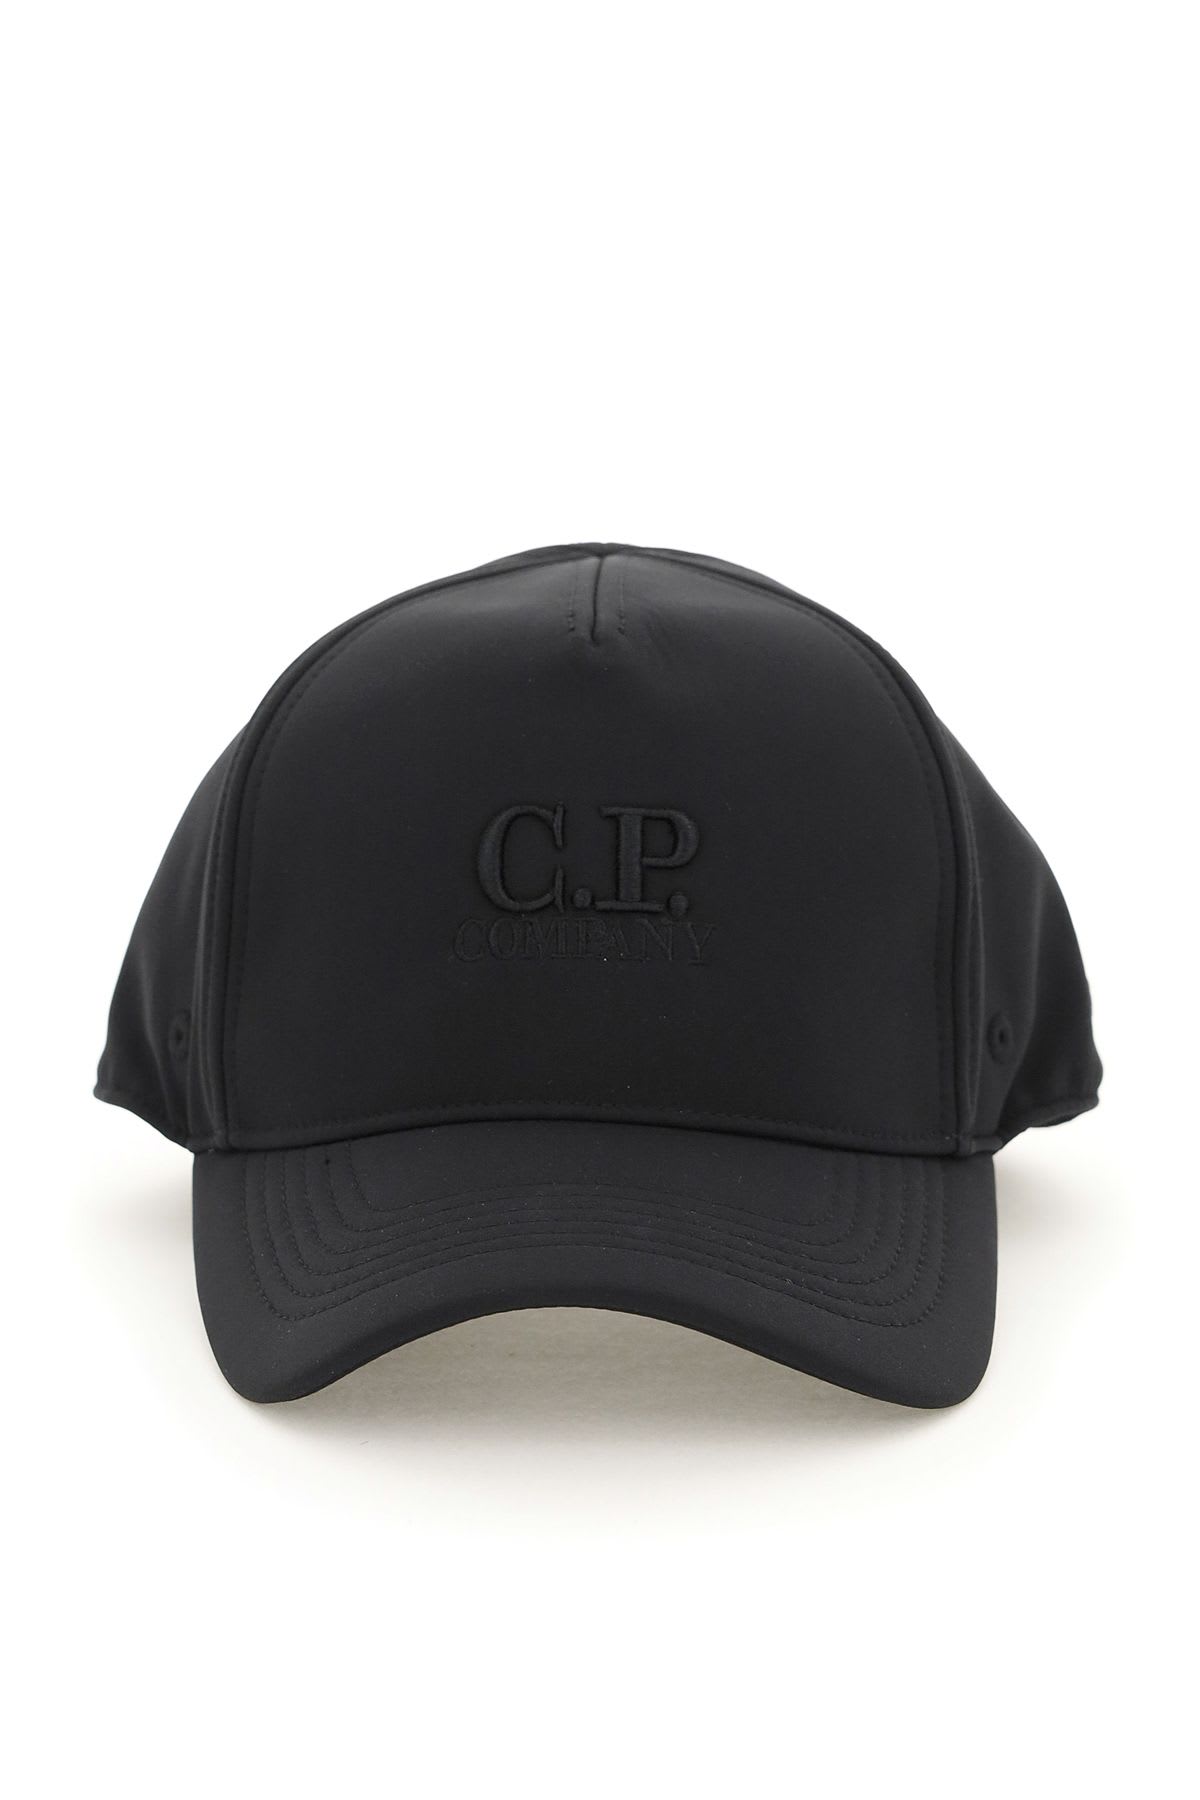 C.P. Company Logo Baseball Hat